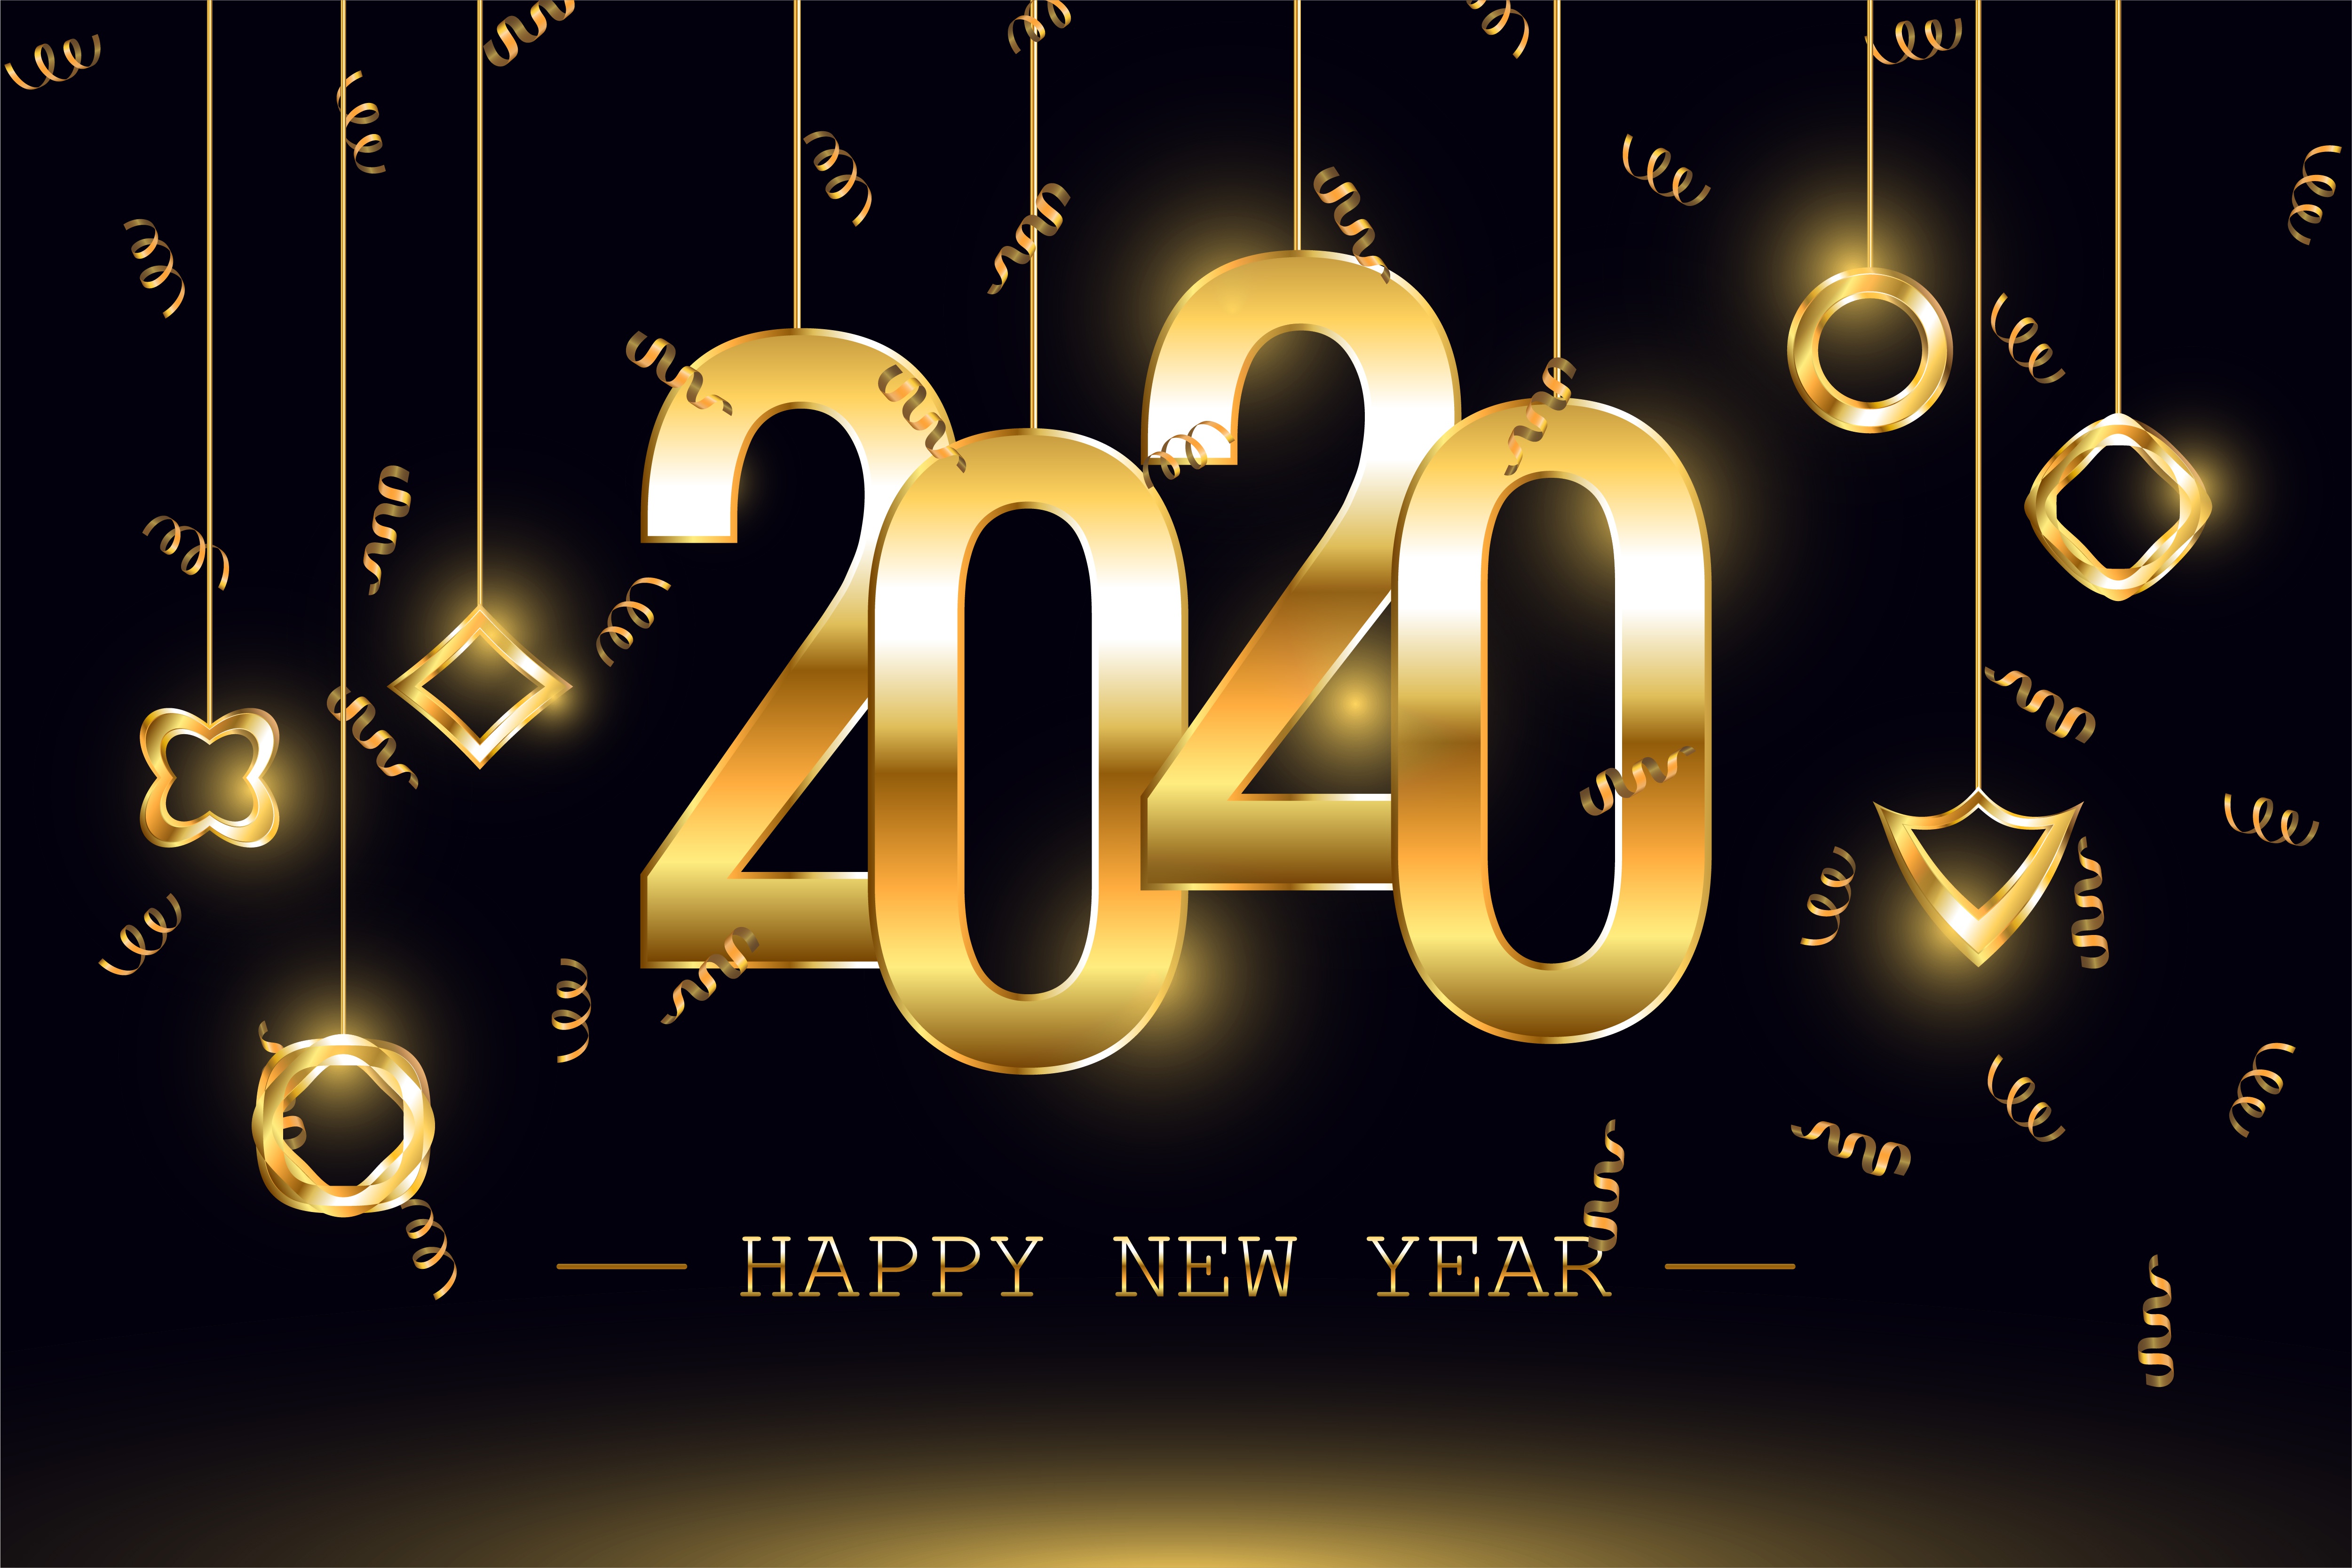 New Year 2020 4k Ultra HD Wallpaper Background Image 5001x3334